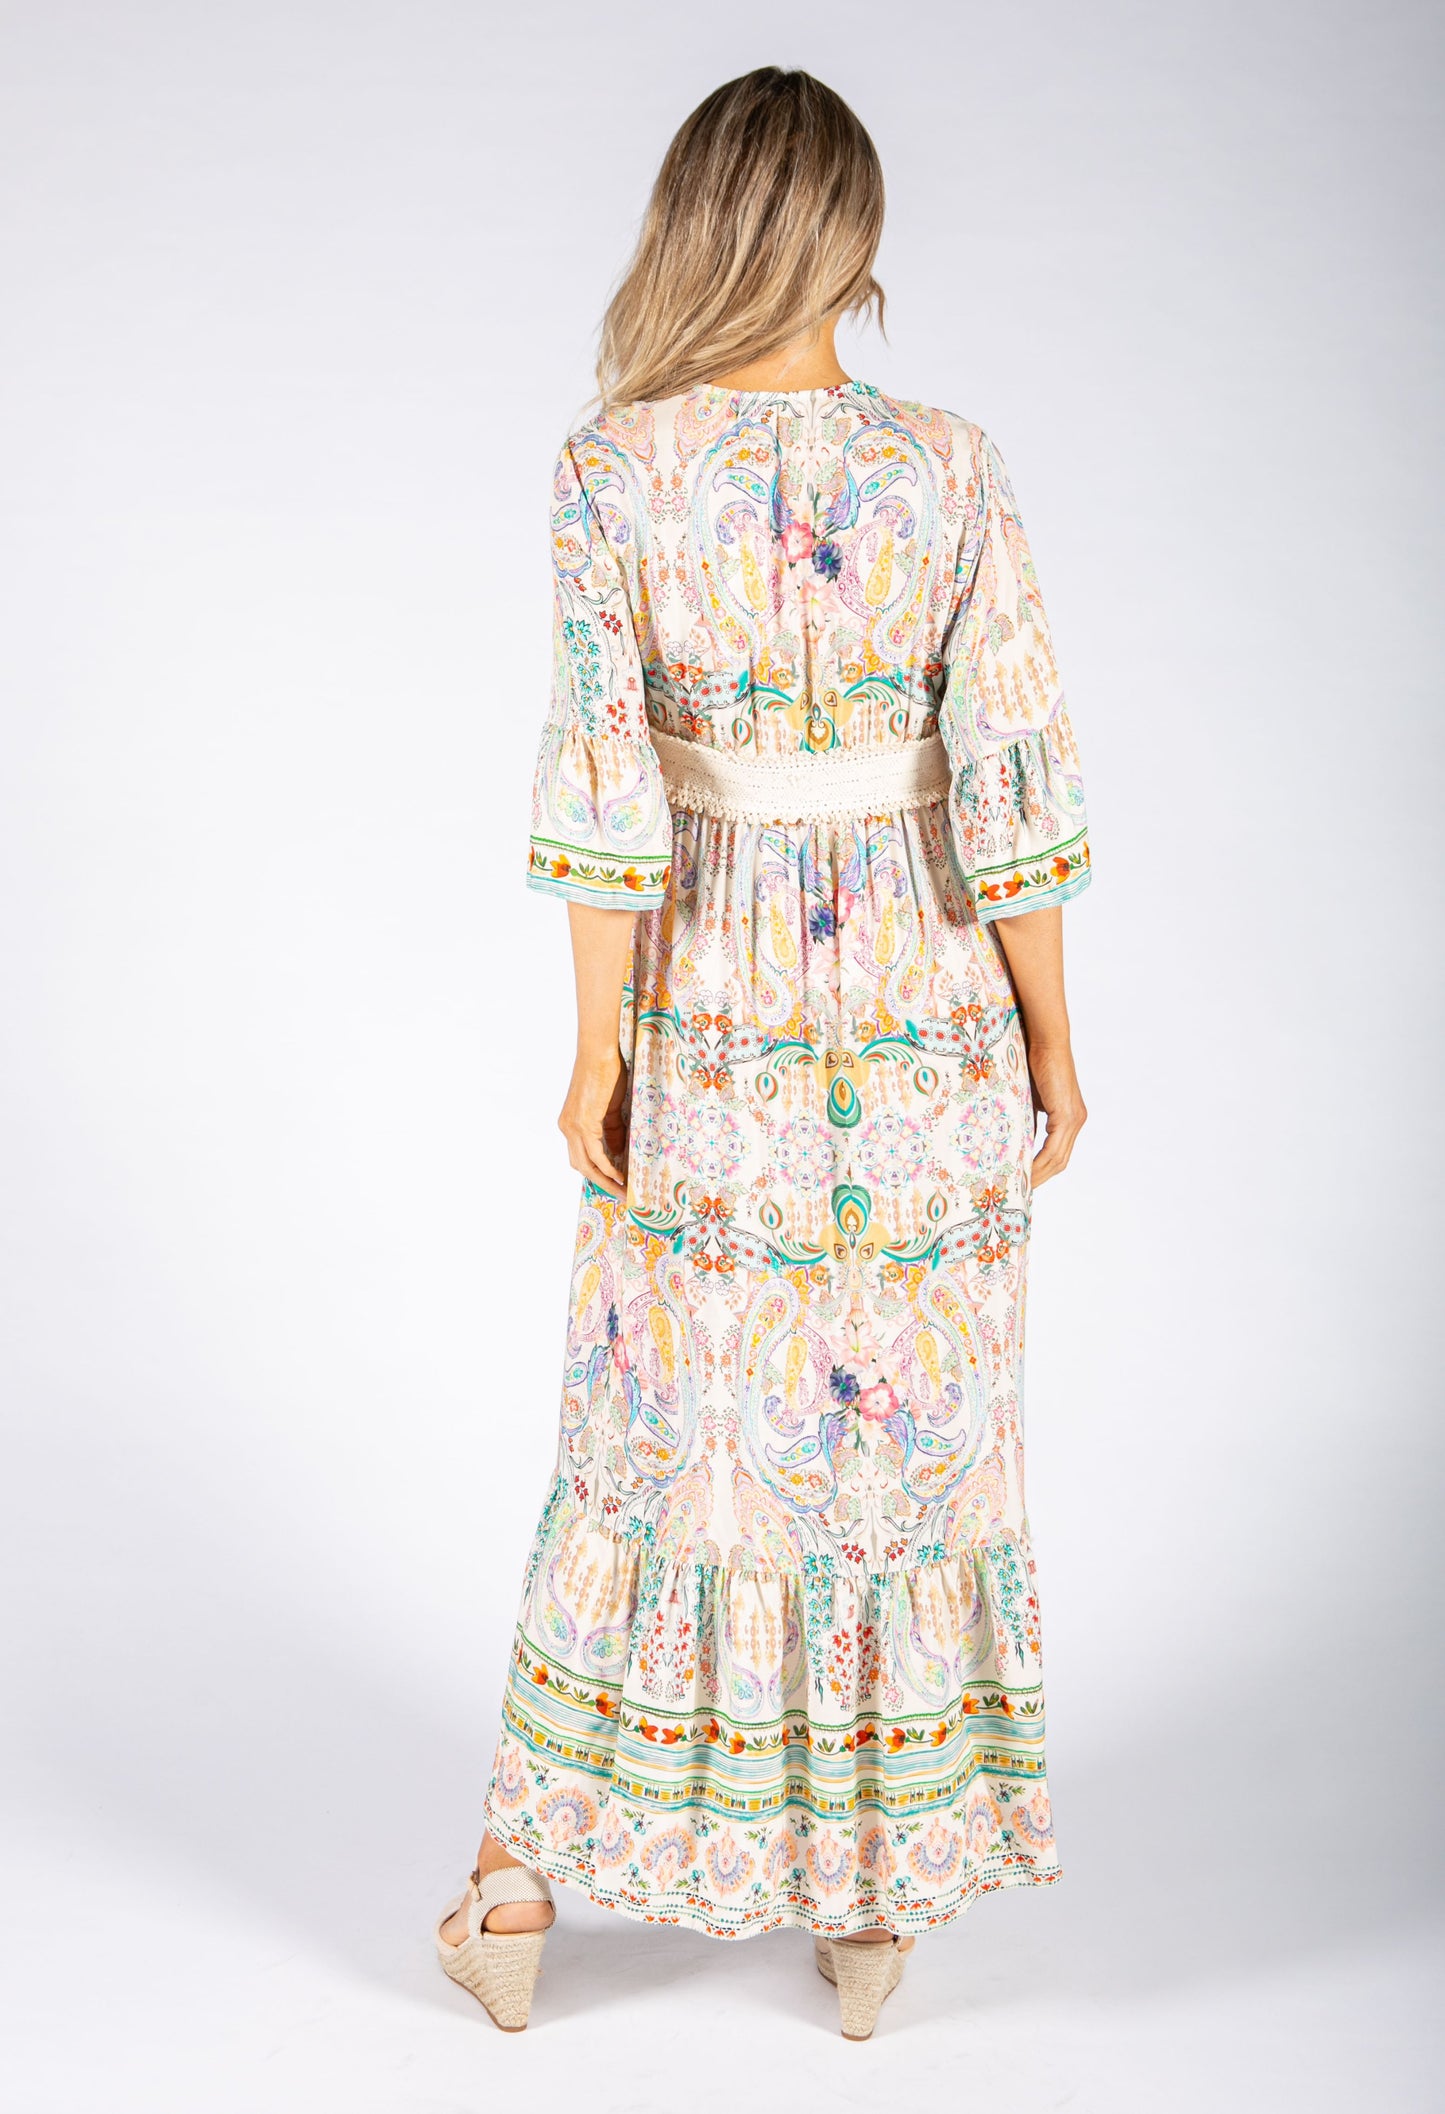 Paisley Print Boho Style Dress